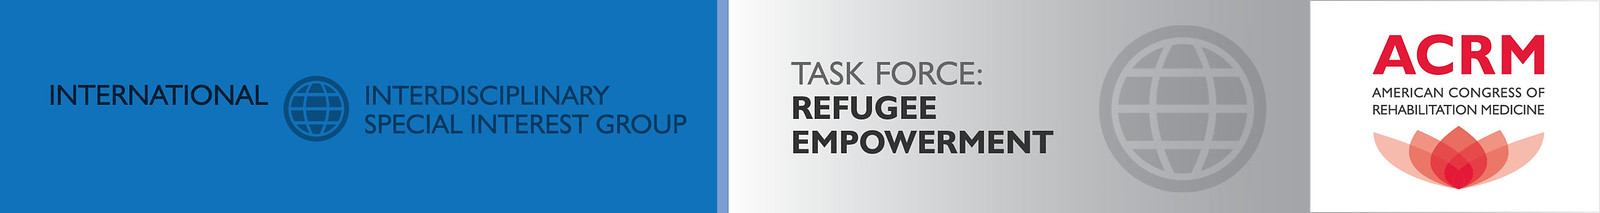 ACRM Refugee Empowerment Task Force header